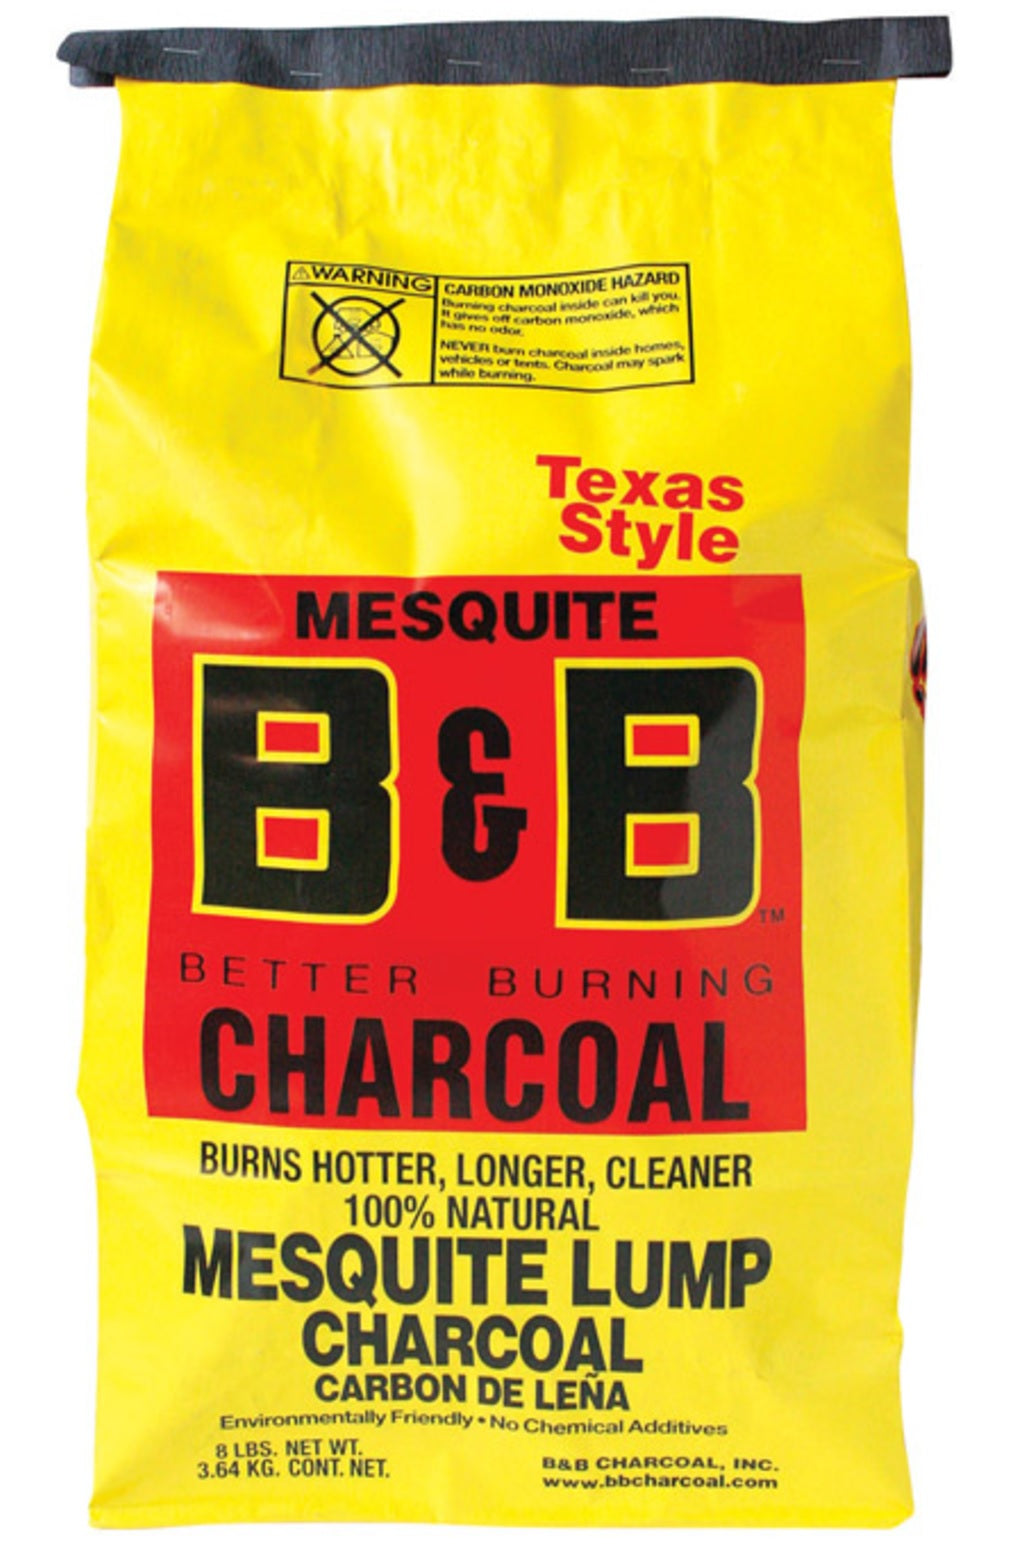 B & B Charcoal 00050 Organic Mesquite Lump Charcoal, 8 Lbs